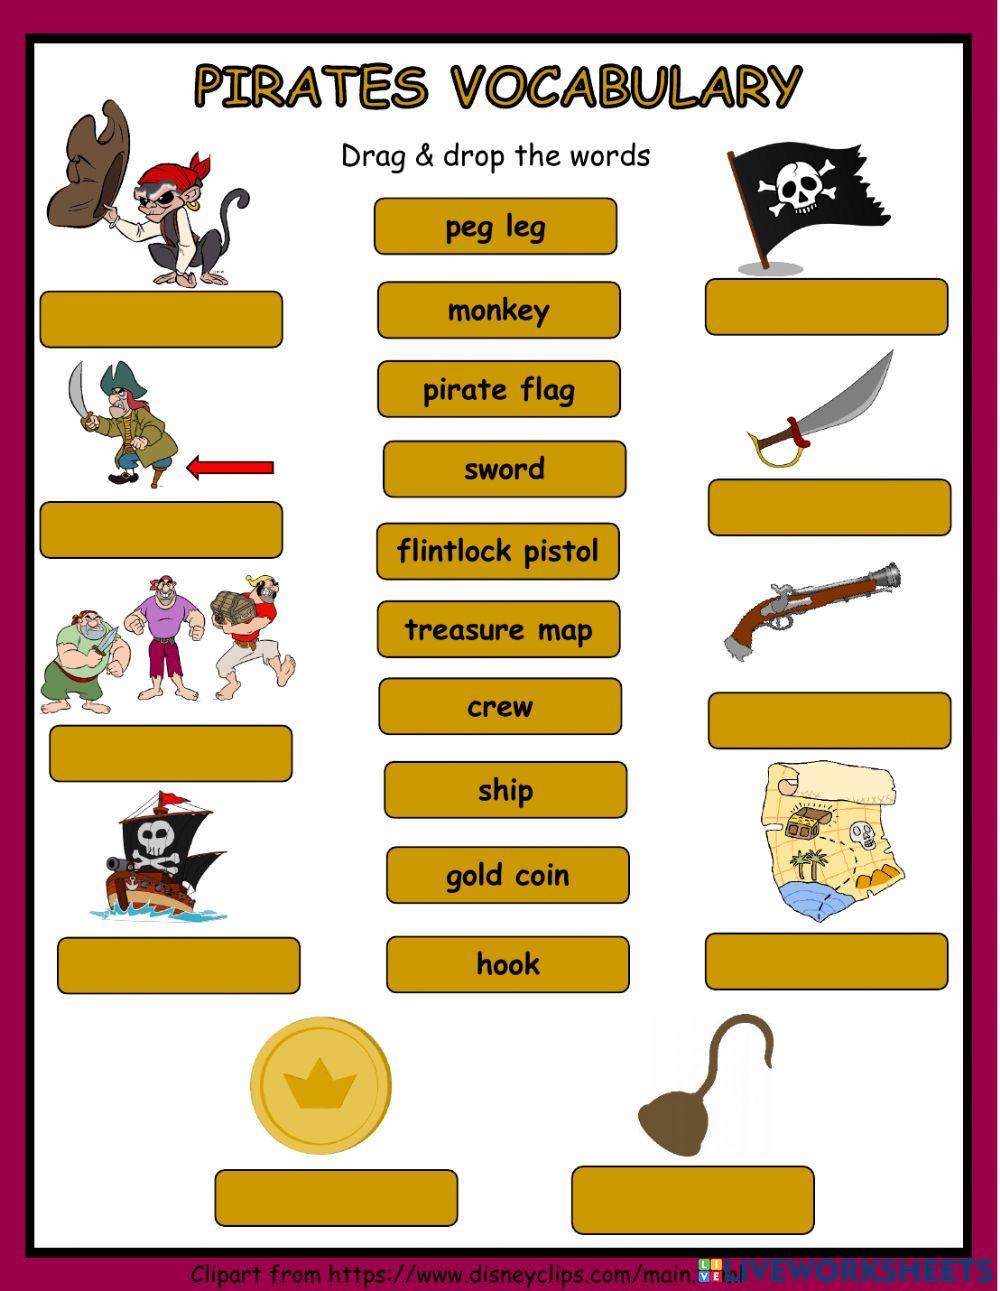 Pirate Vocabulary Drag & Drop